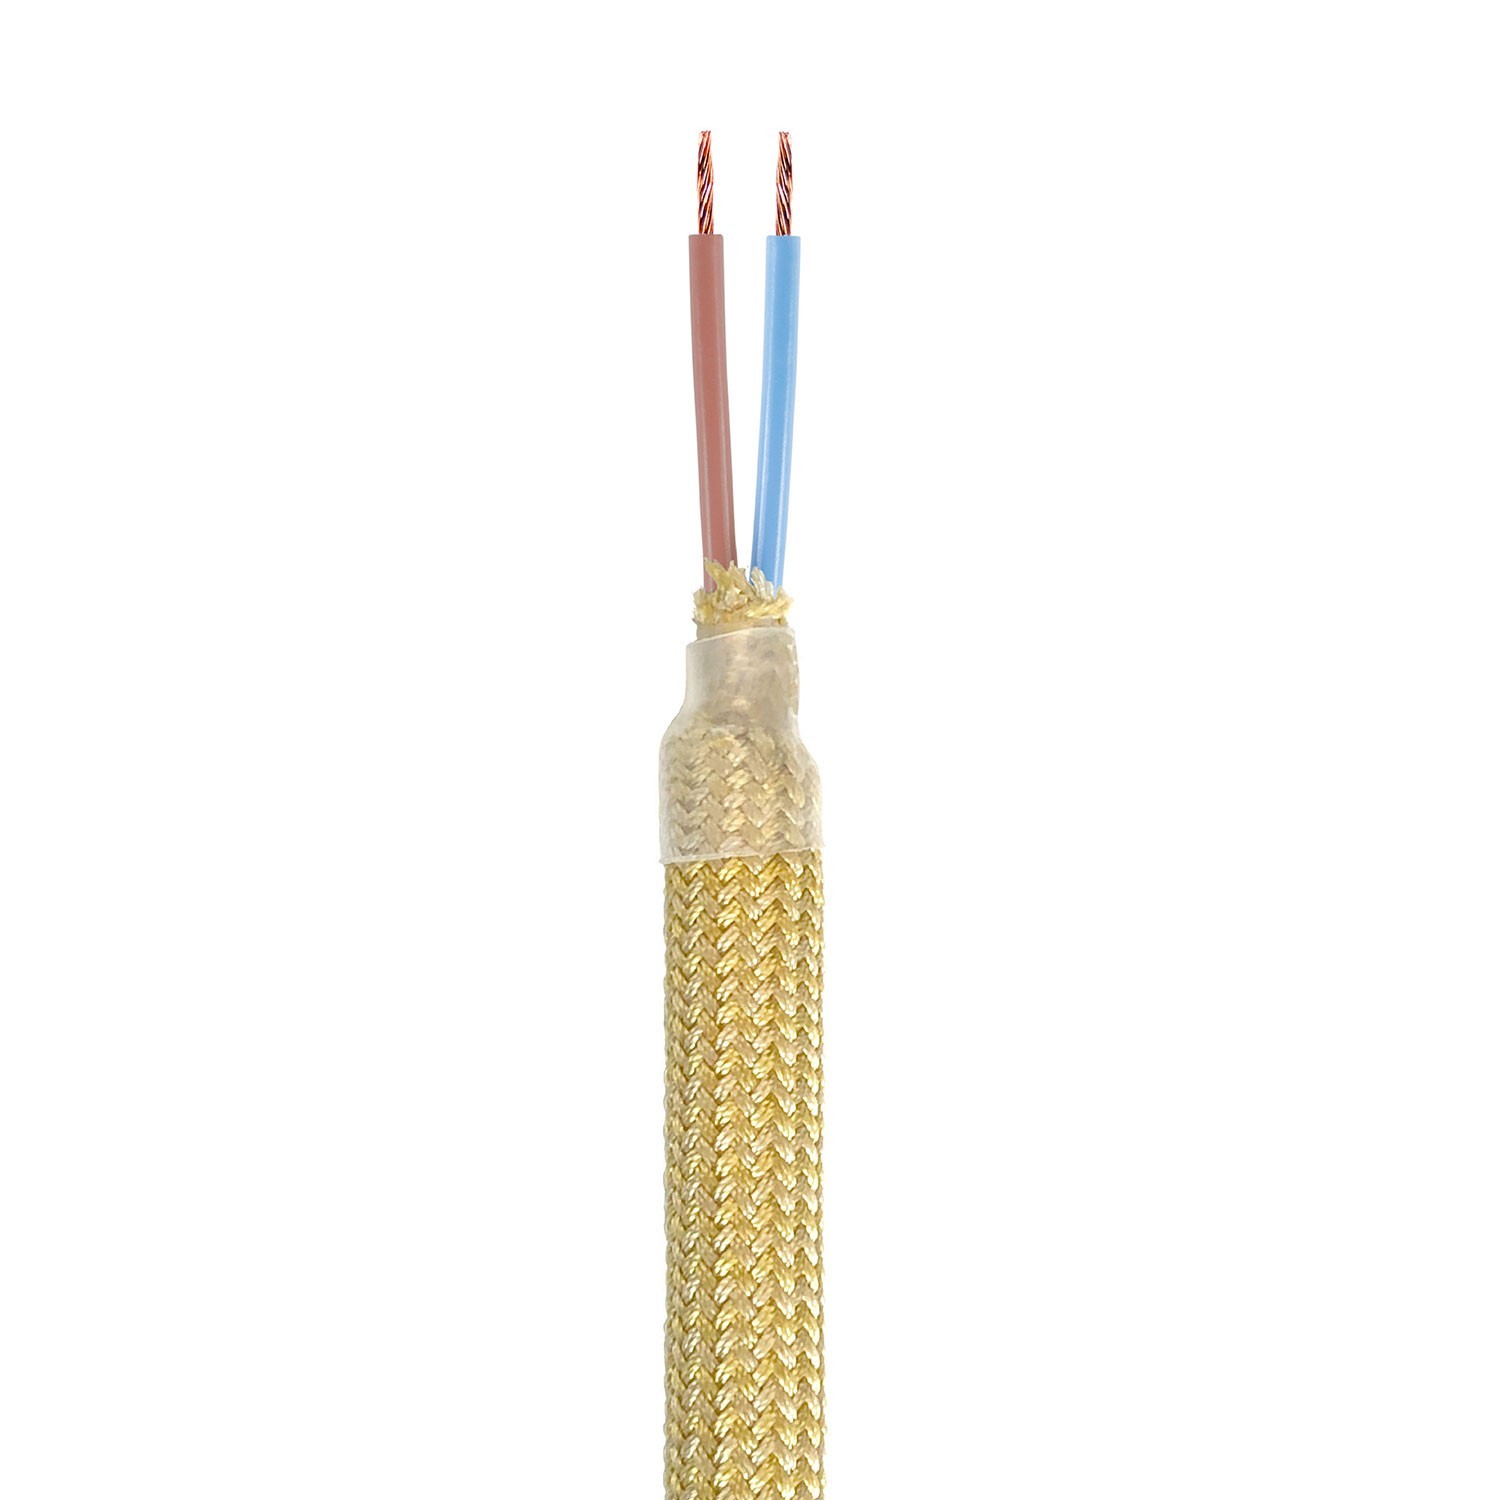 Kit Creative Flex tubo flexible revestido de tejido mostaza RM79 con terminales metálicos